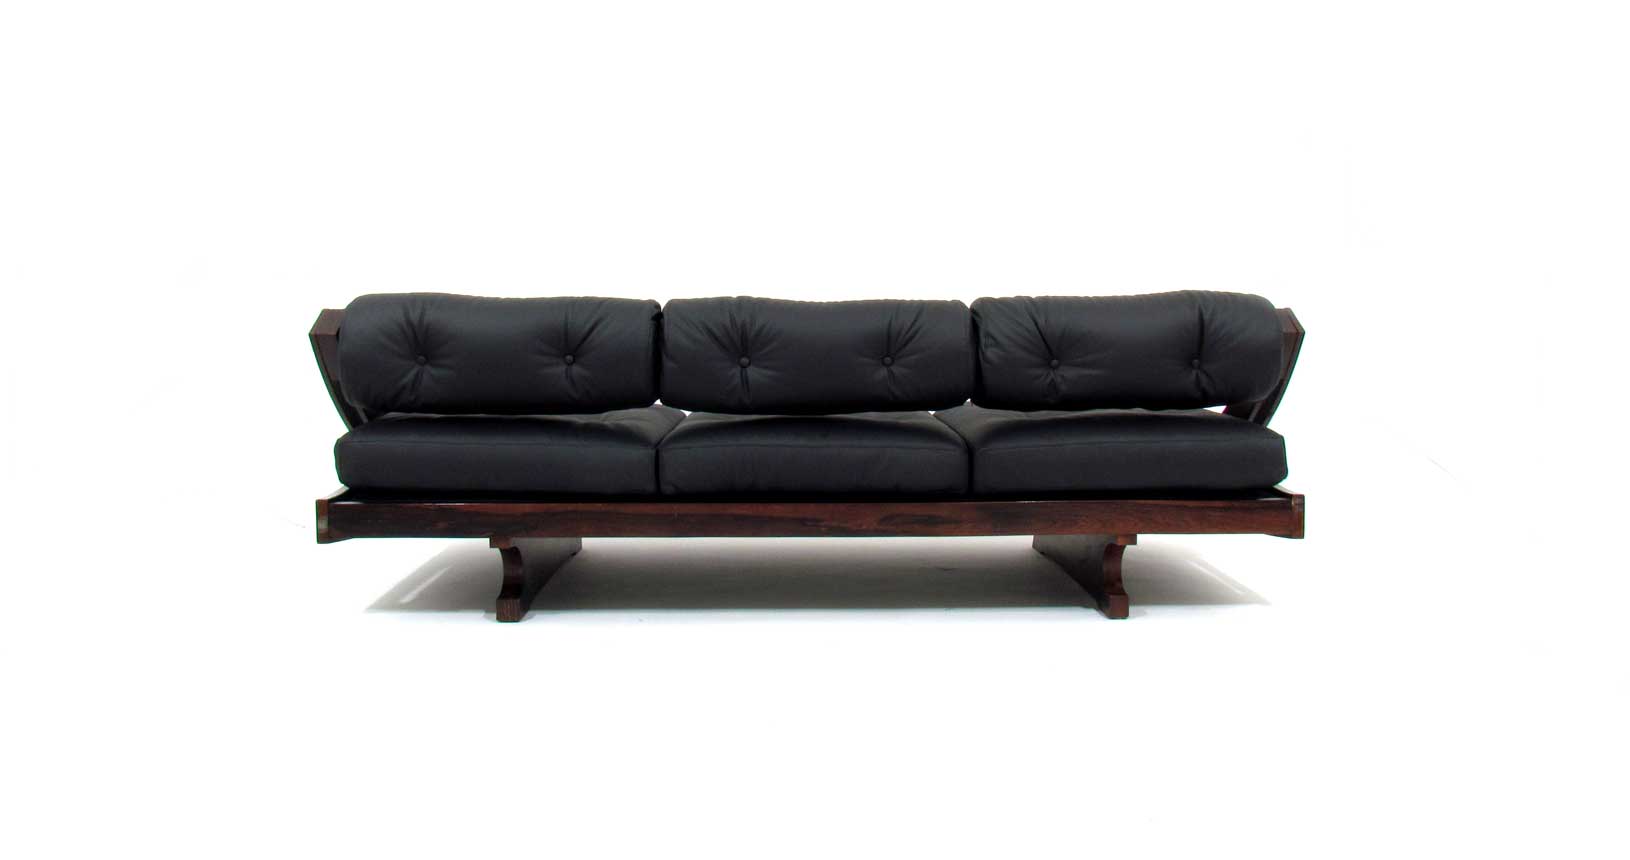 sormani gianni songia gs195 divano sofa sofabed leather vintage iconic design furniture